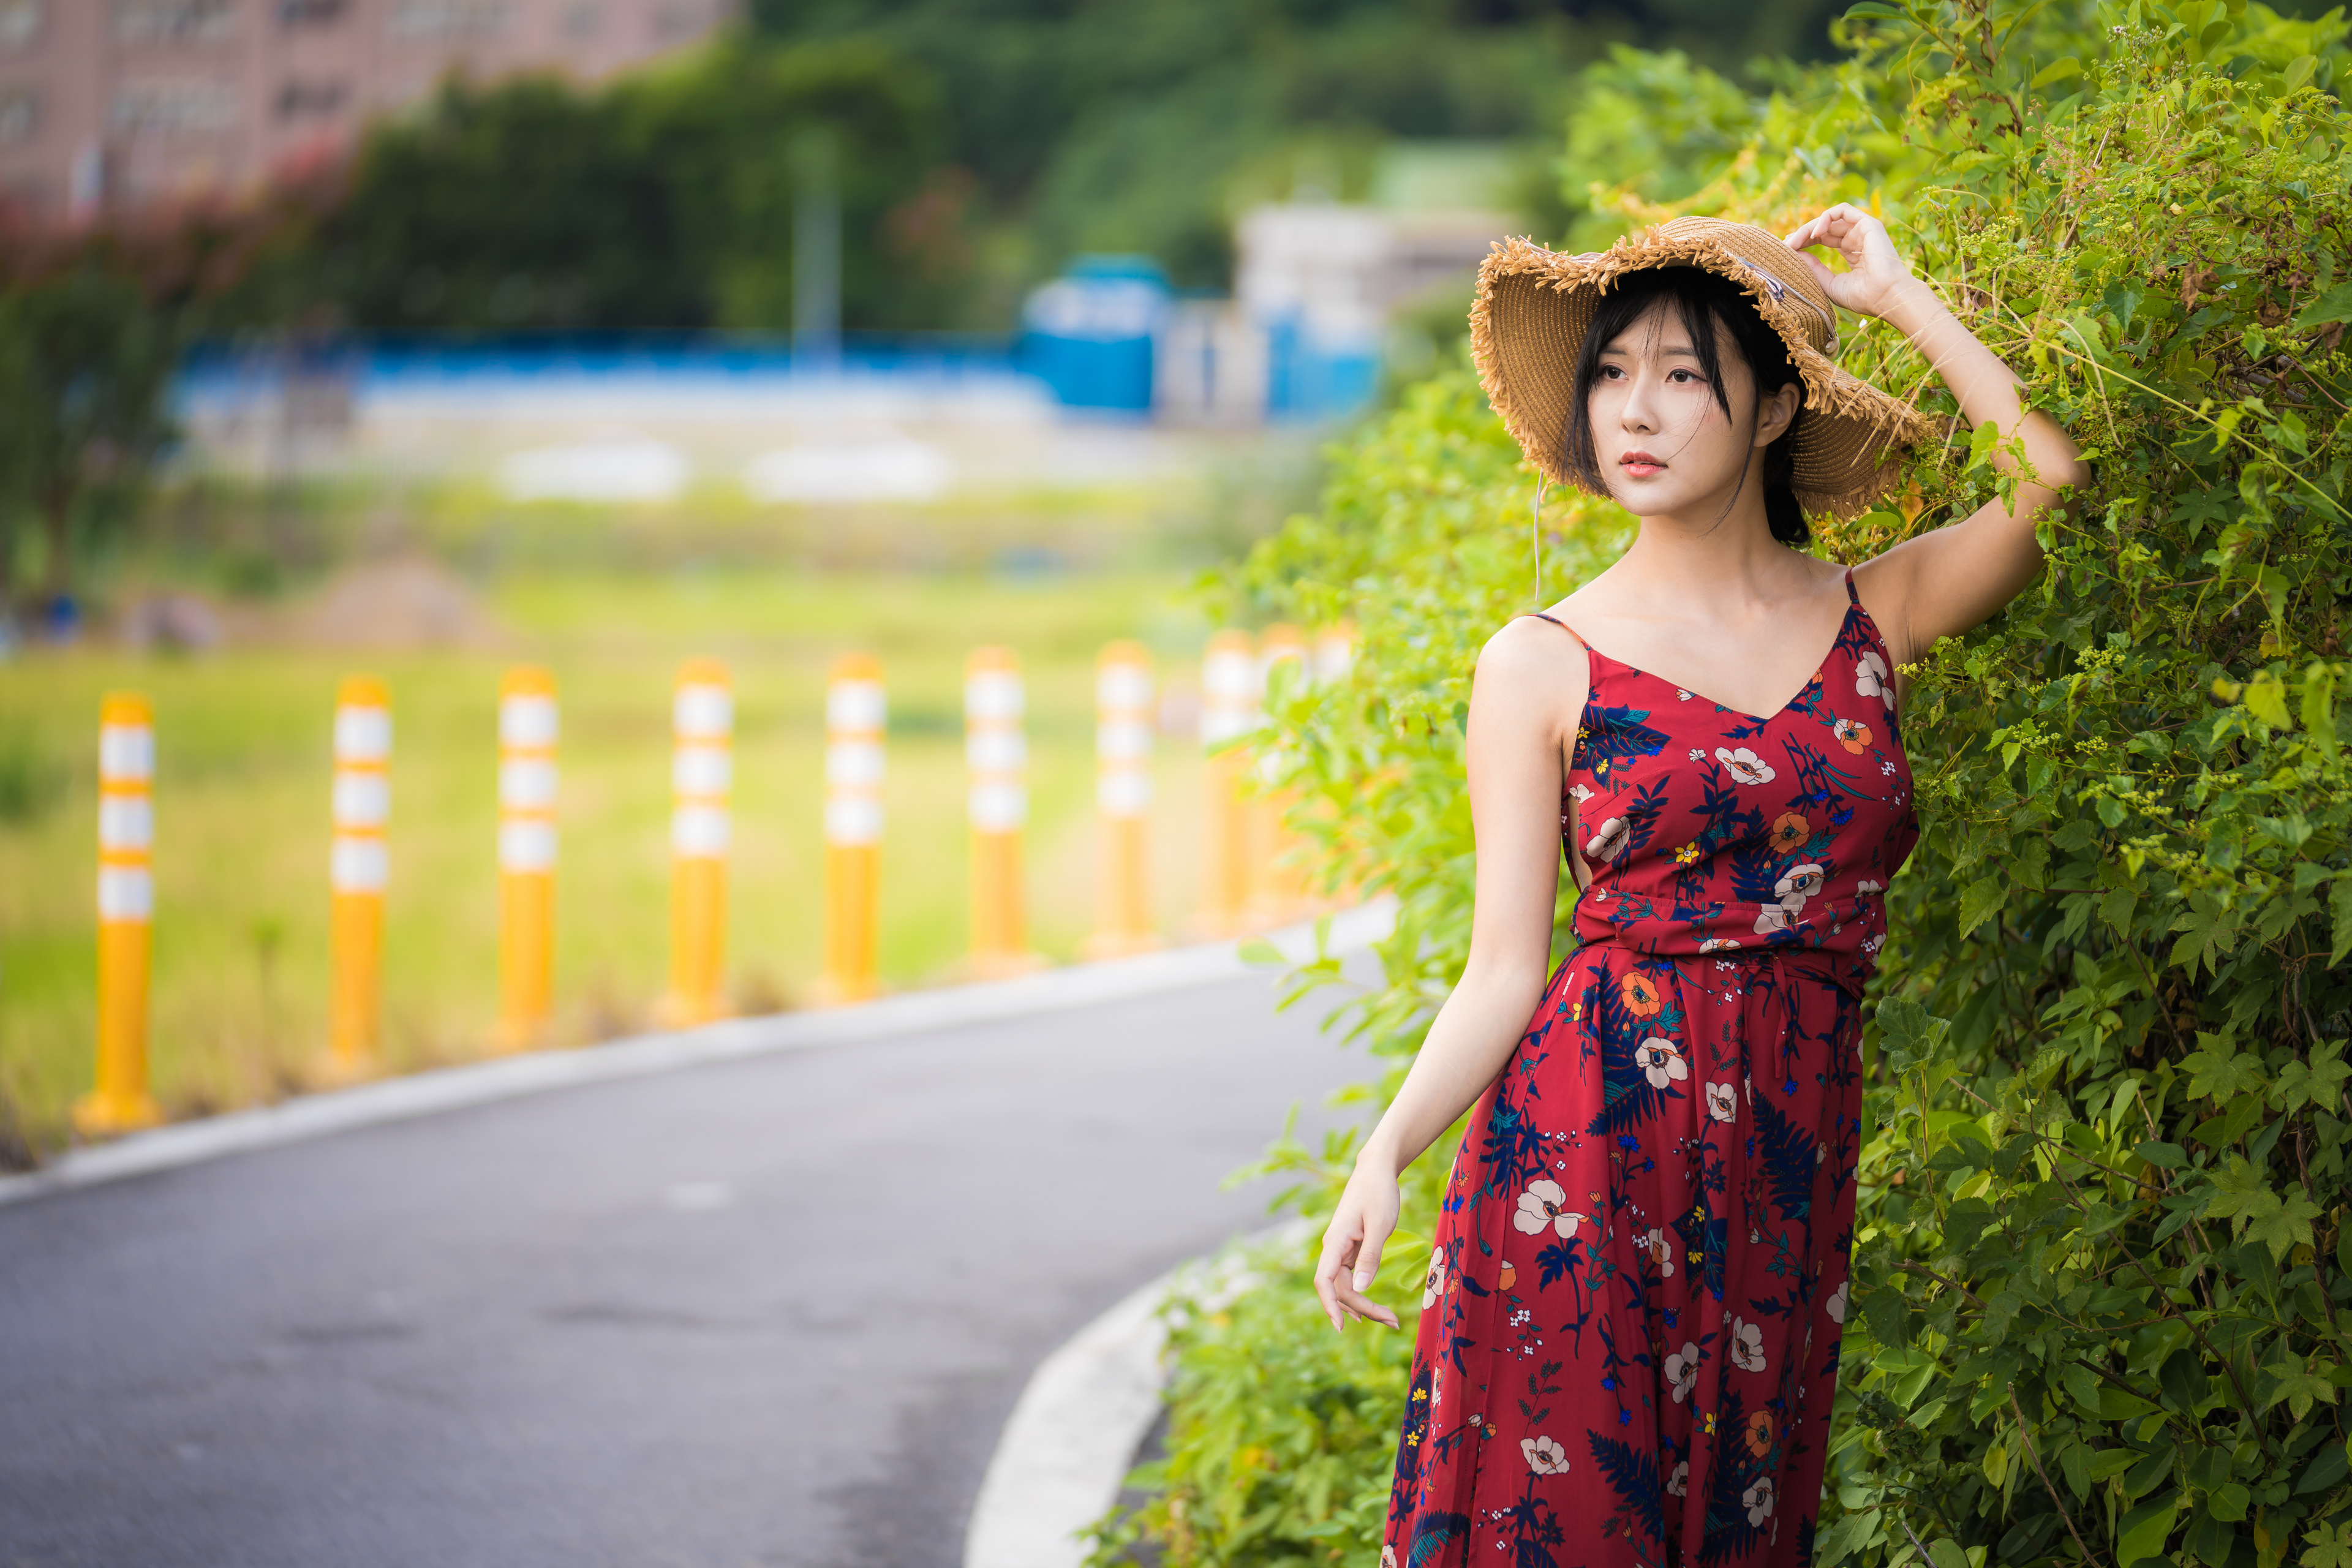 Asian Model Women Long Hair Brunette Straw Hat Flower Dress Bushes Grass Depth Of Field Poles Trees  3840x2560